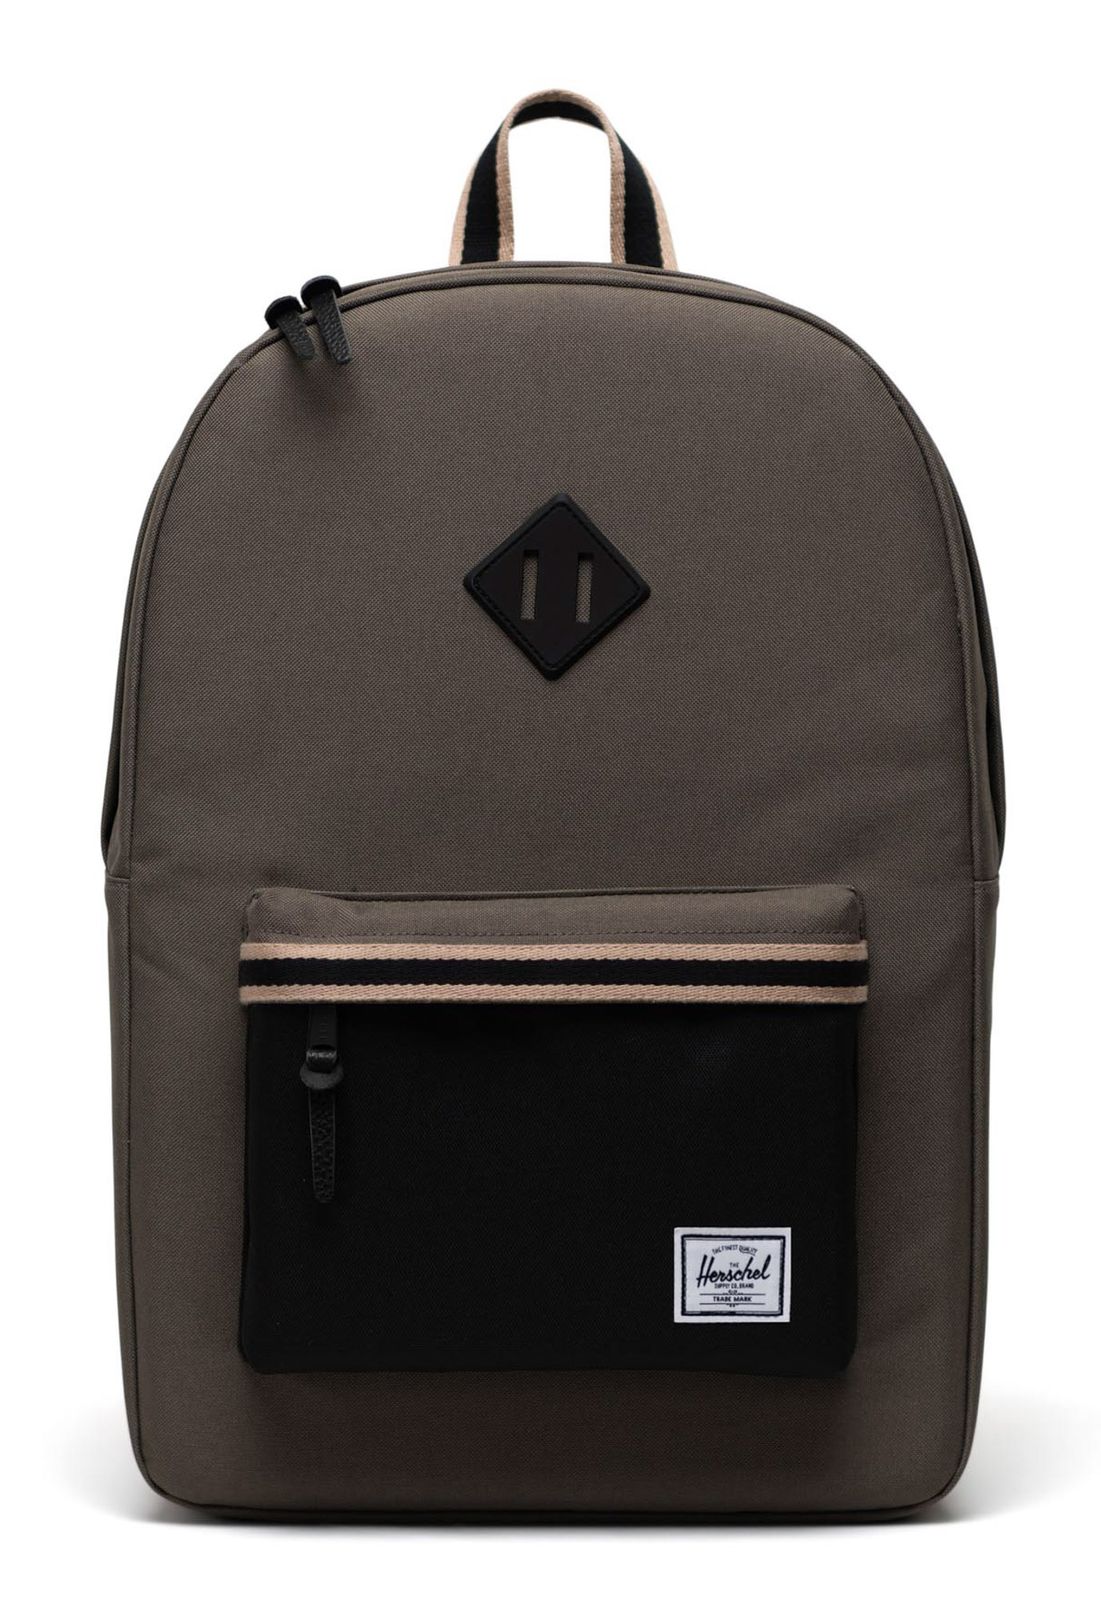 Herschel Backpack Bungee Cord / Black | Buy bags, purses & accessories ...